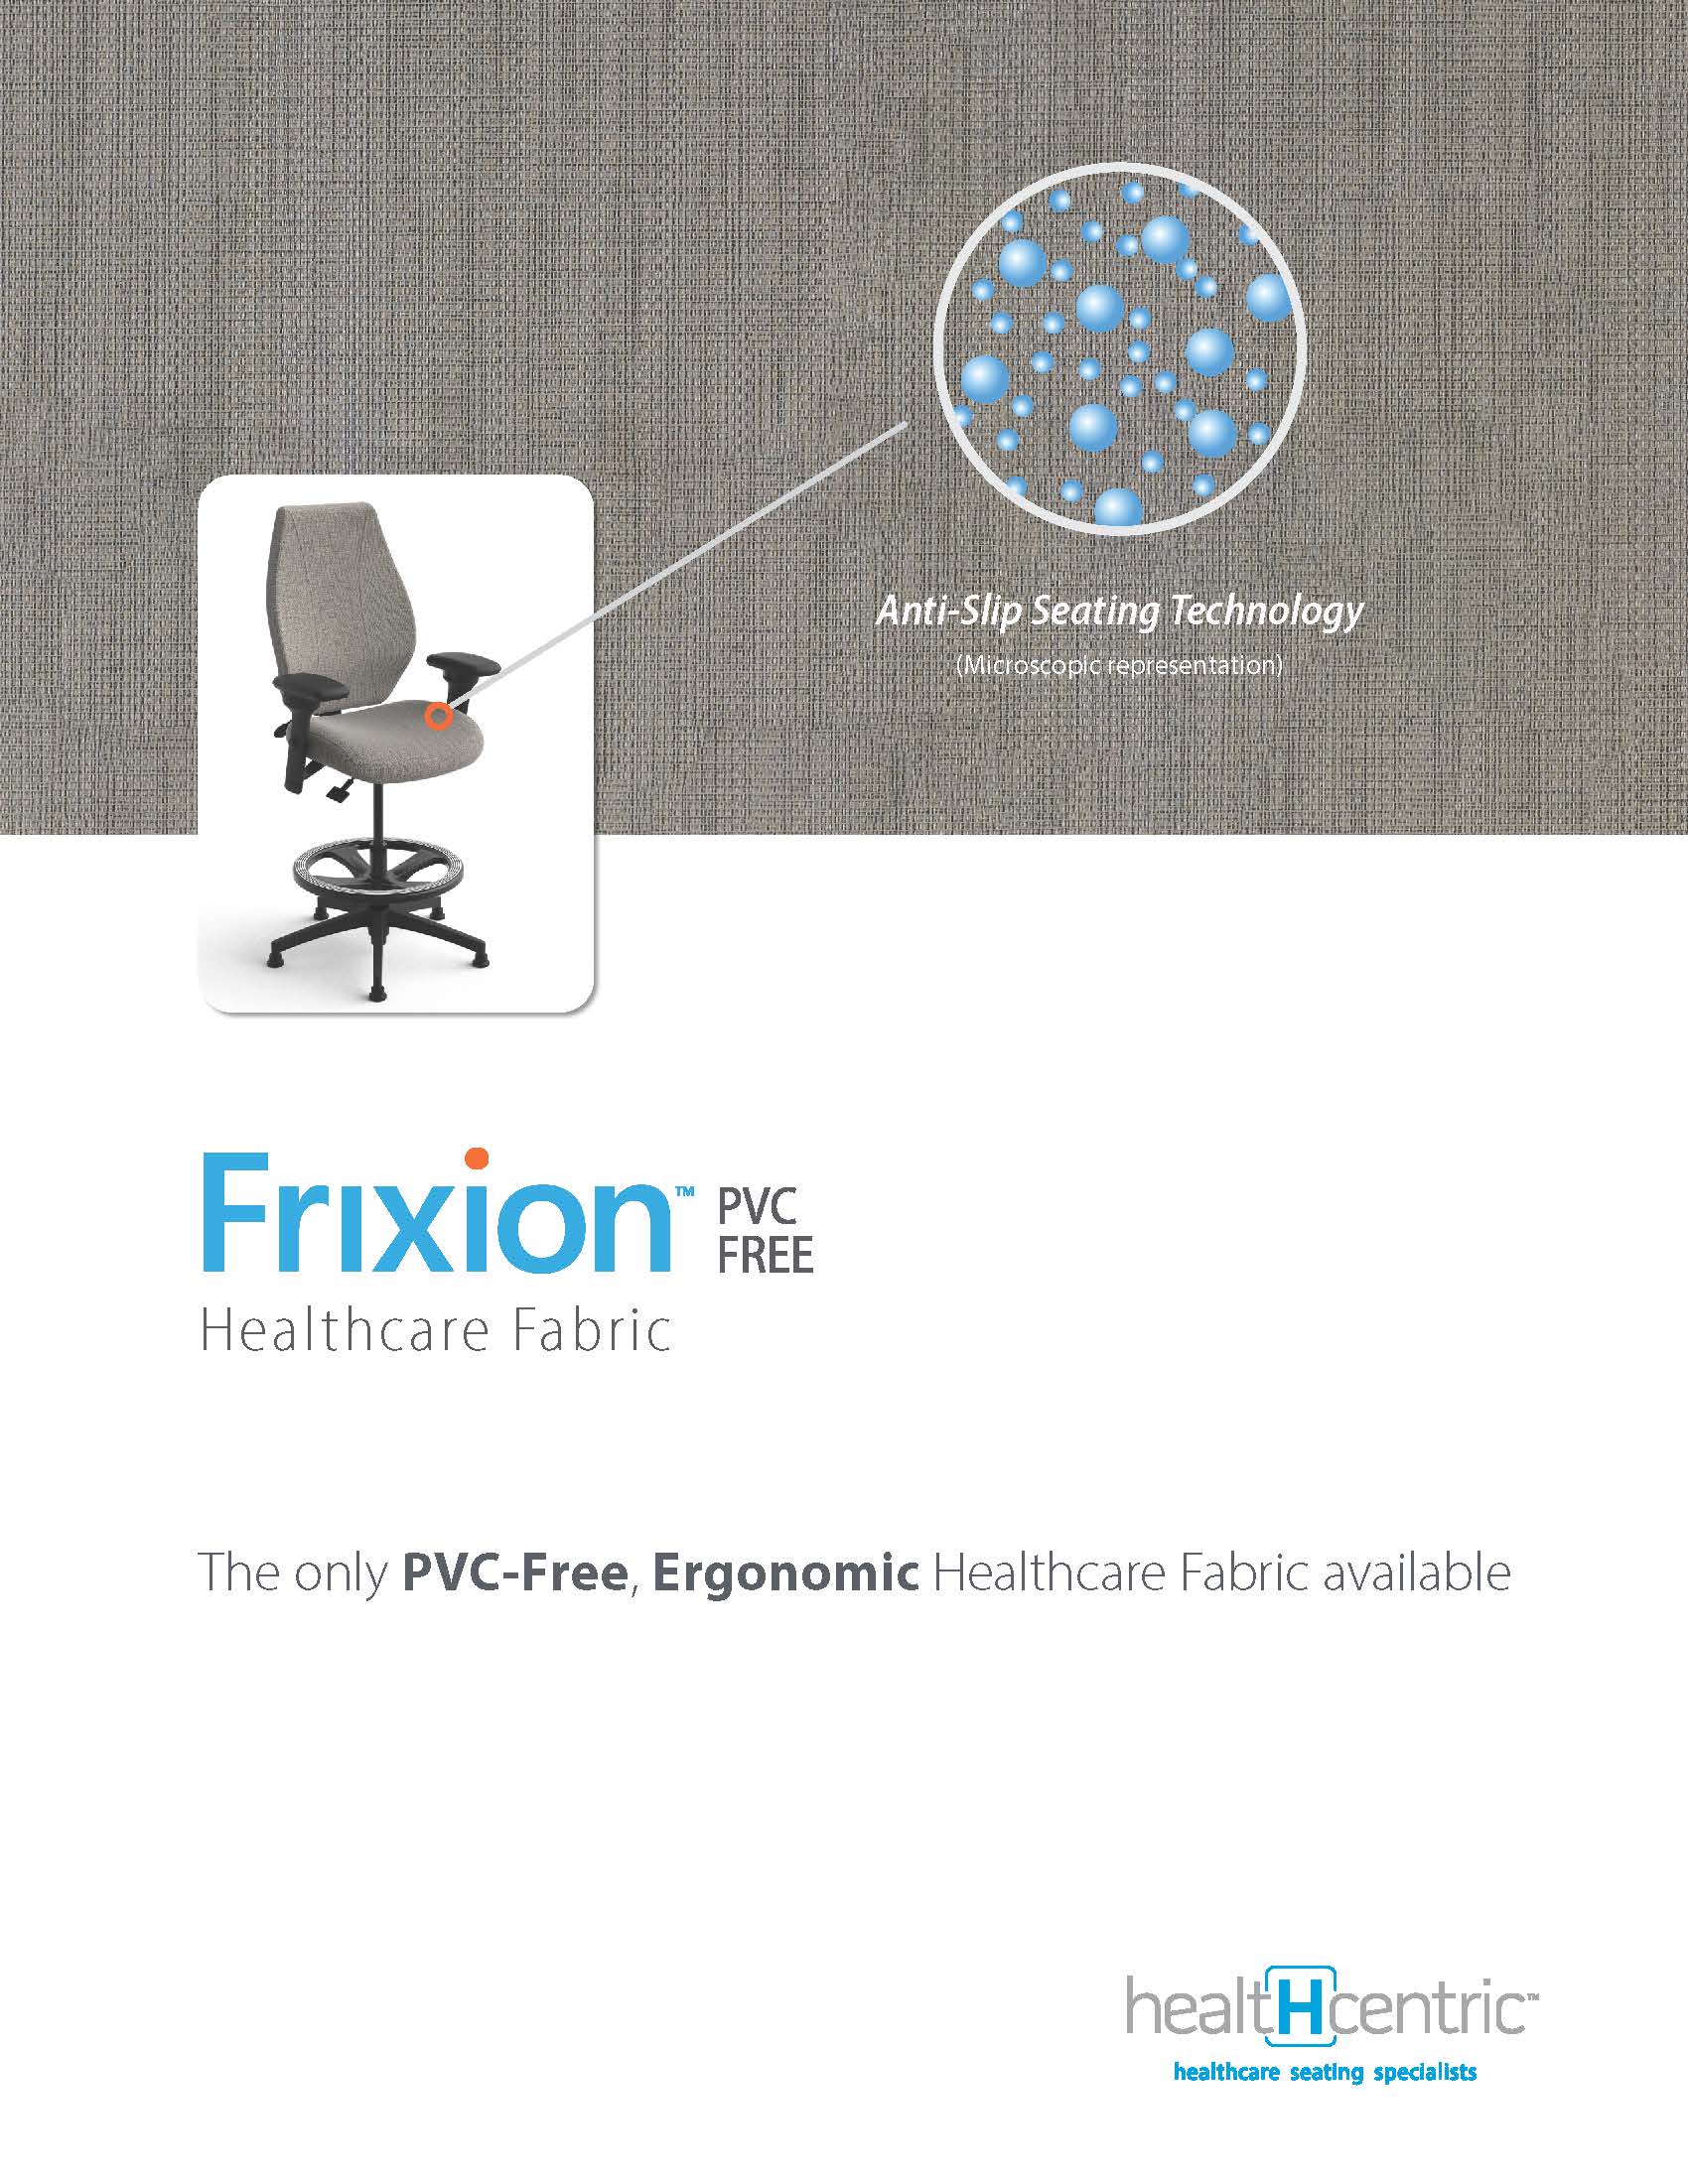 PVC-Free Frixion Healthcare Fabric